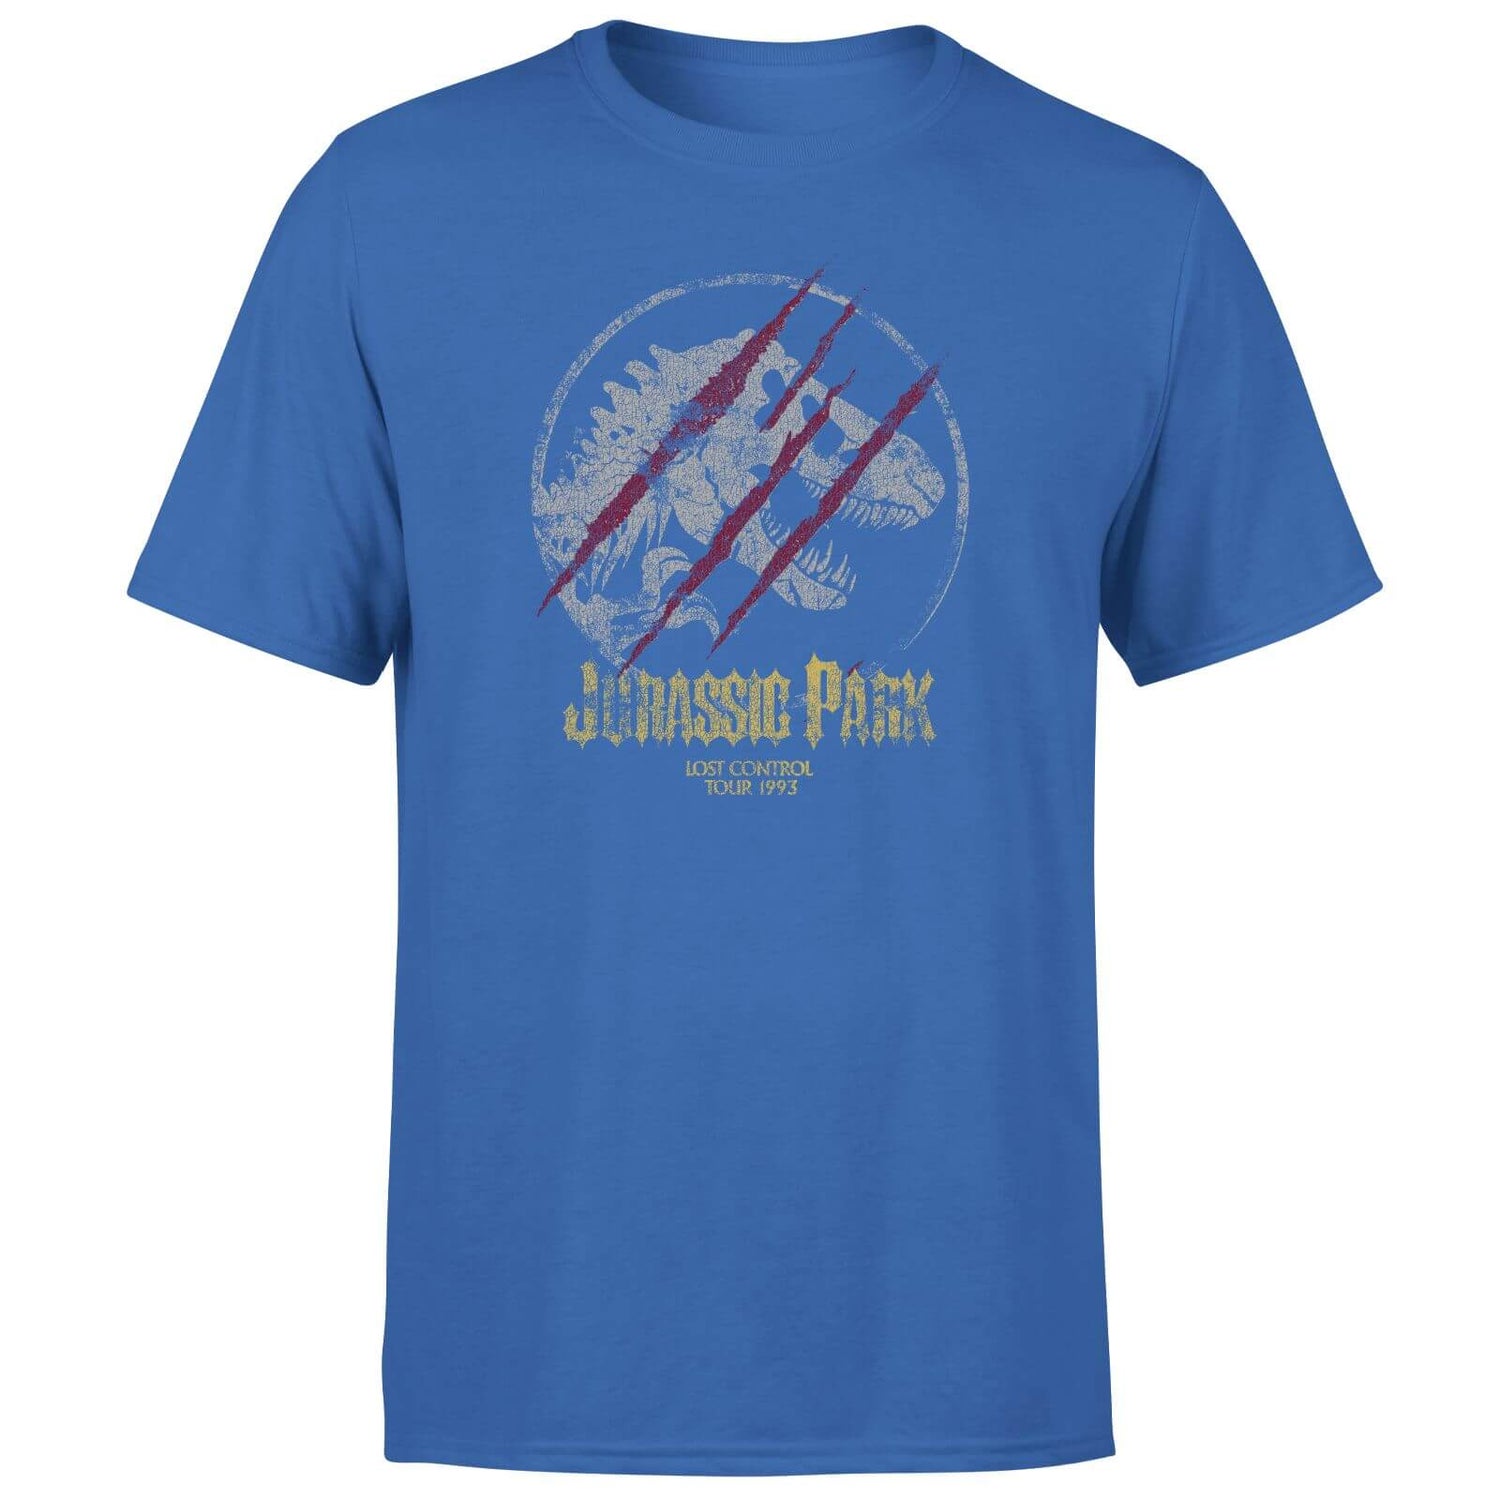 Jurassic Park Lost Control Men's T-Shirt - Blue